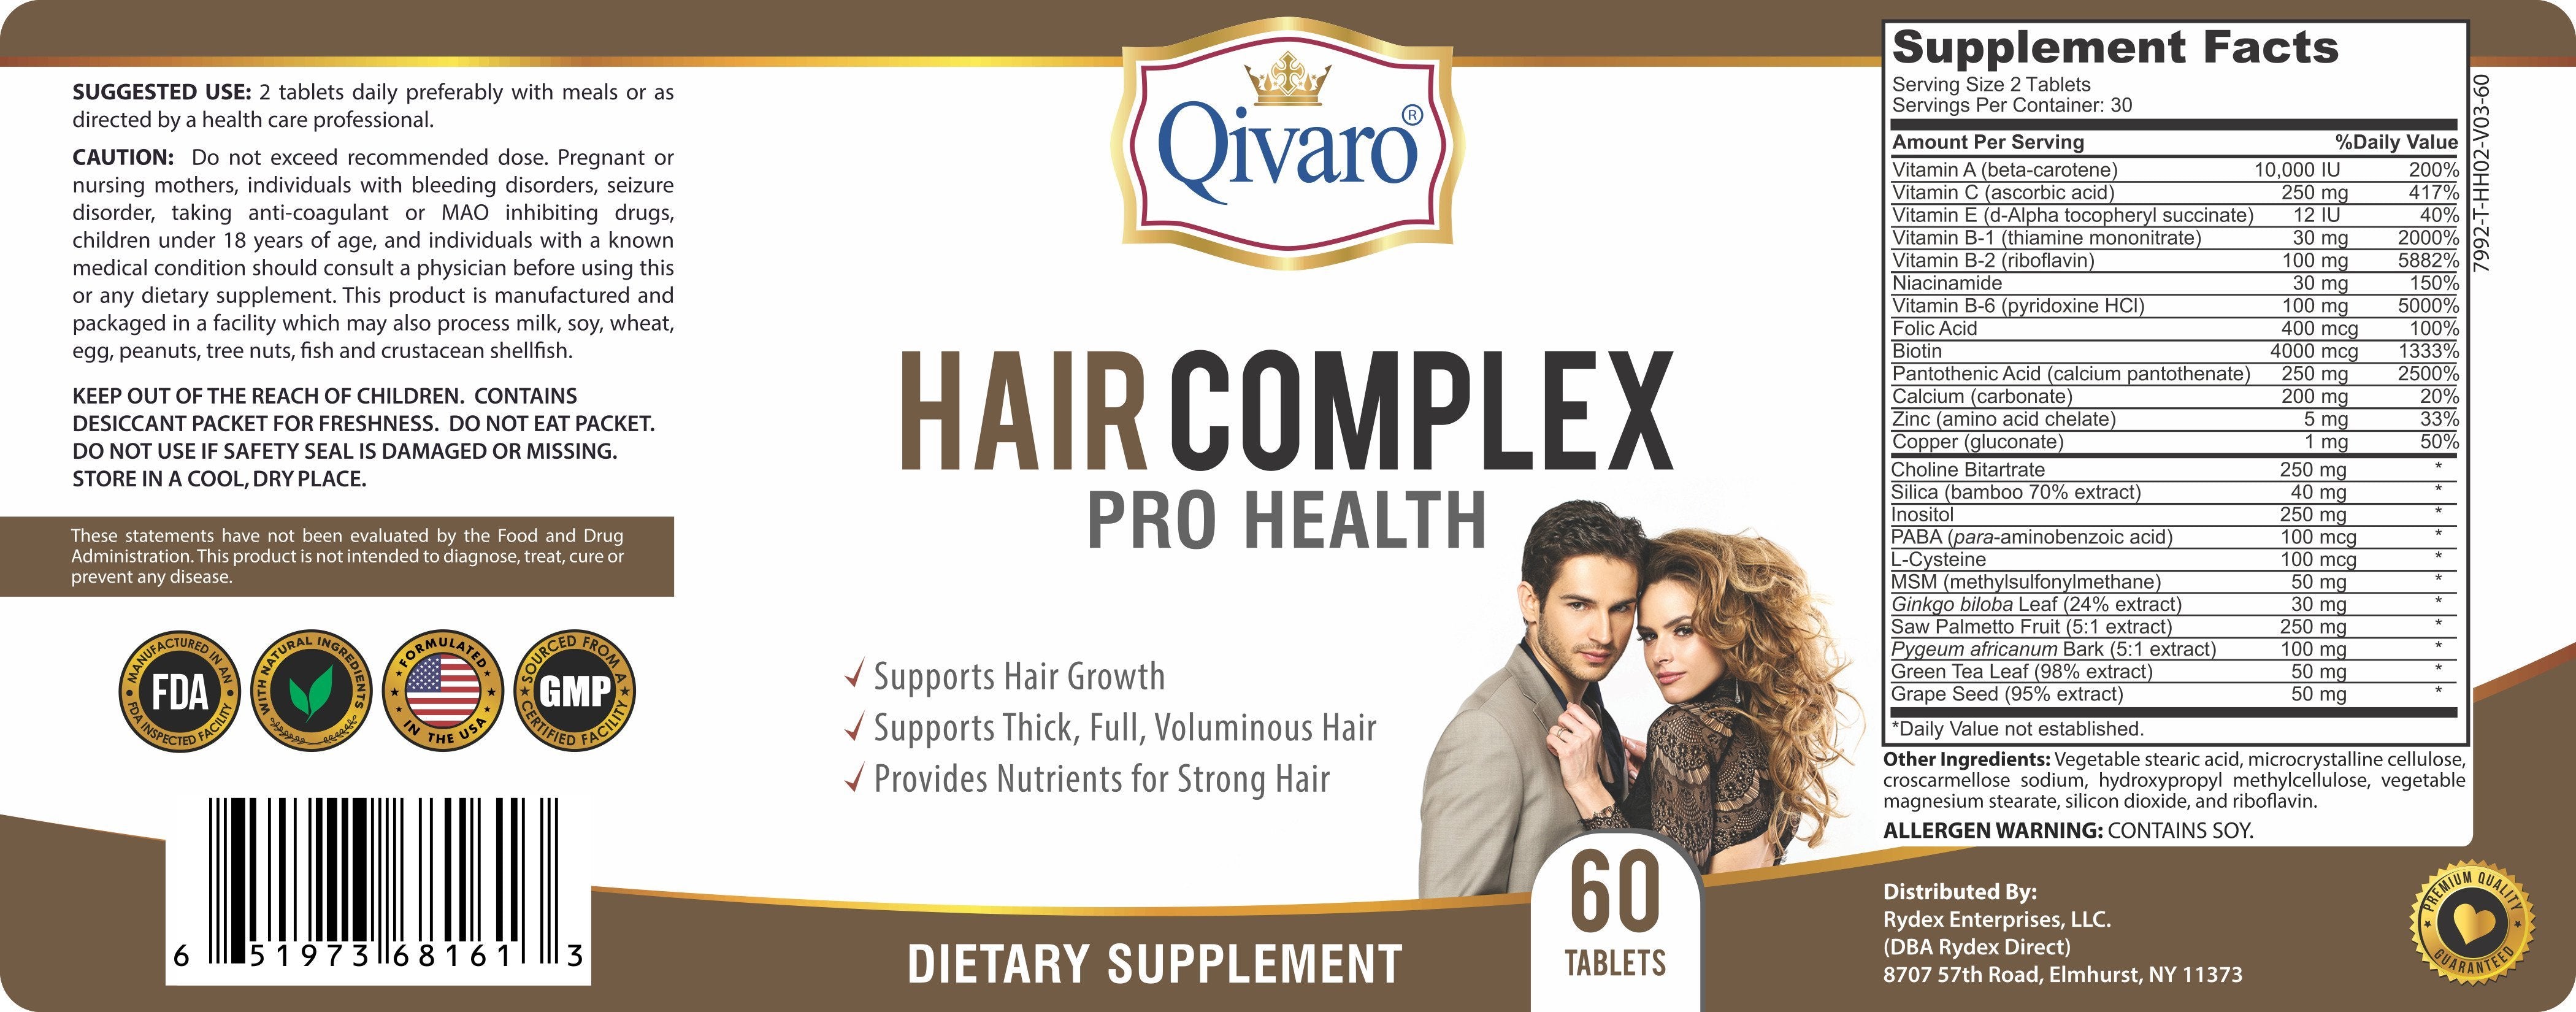 SKU: QIH43: Hair Complex Pro Health